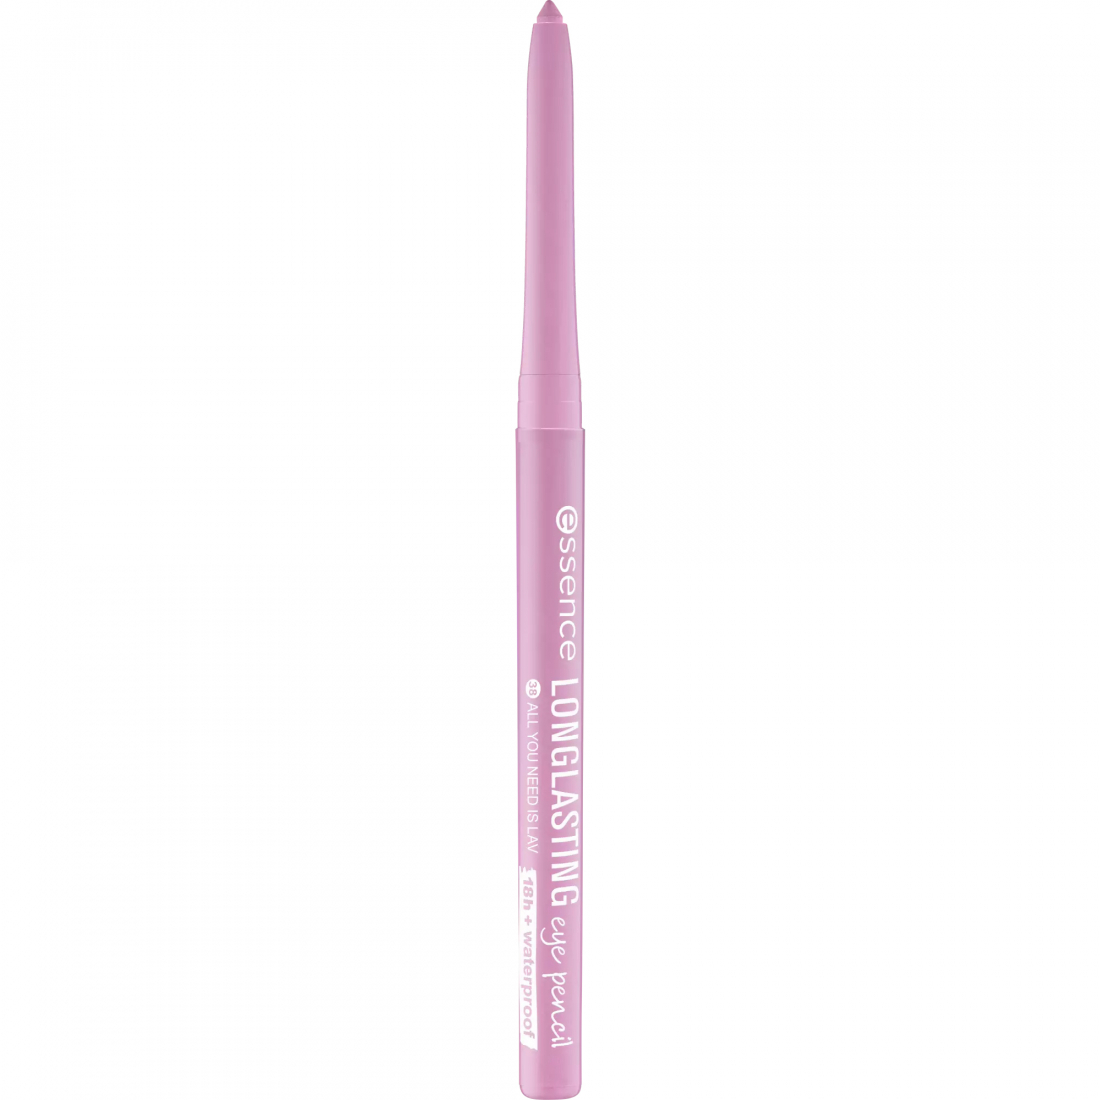 'Long-Lasting 18h' Waterproof Eyeliner Pencil - 38 All You Need Is Lav 0.28 g